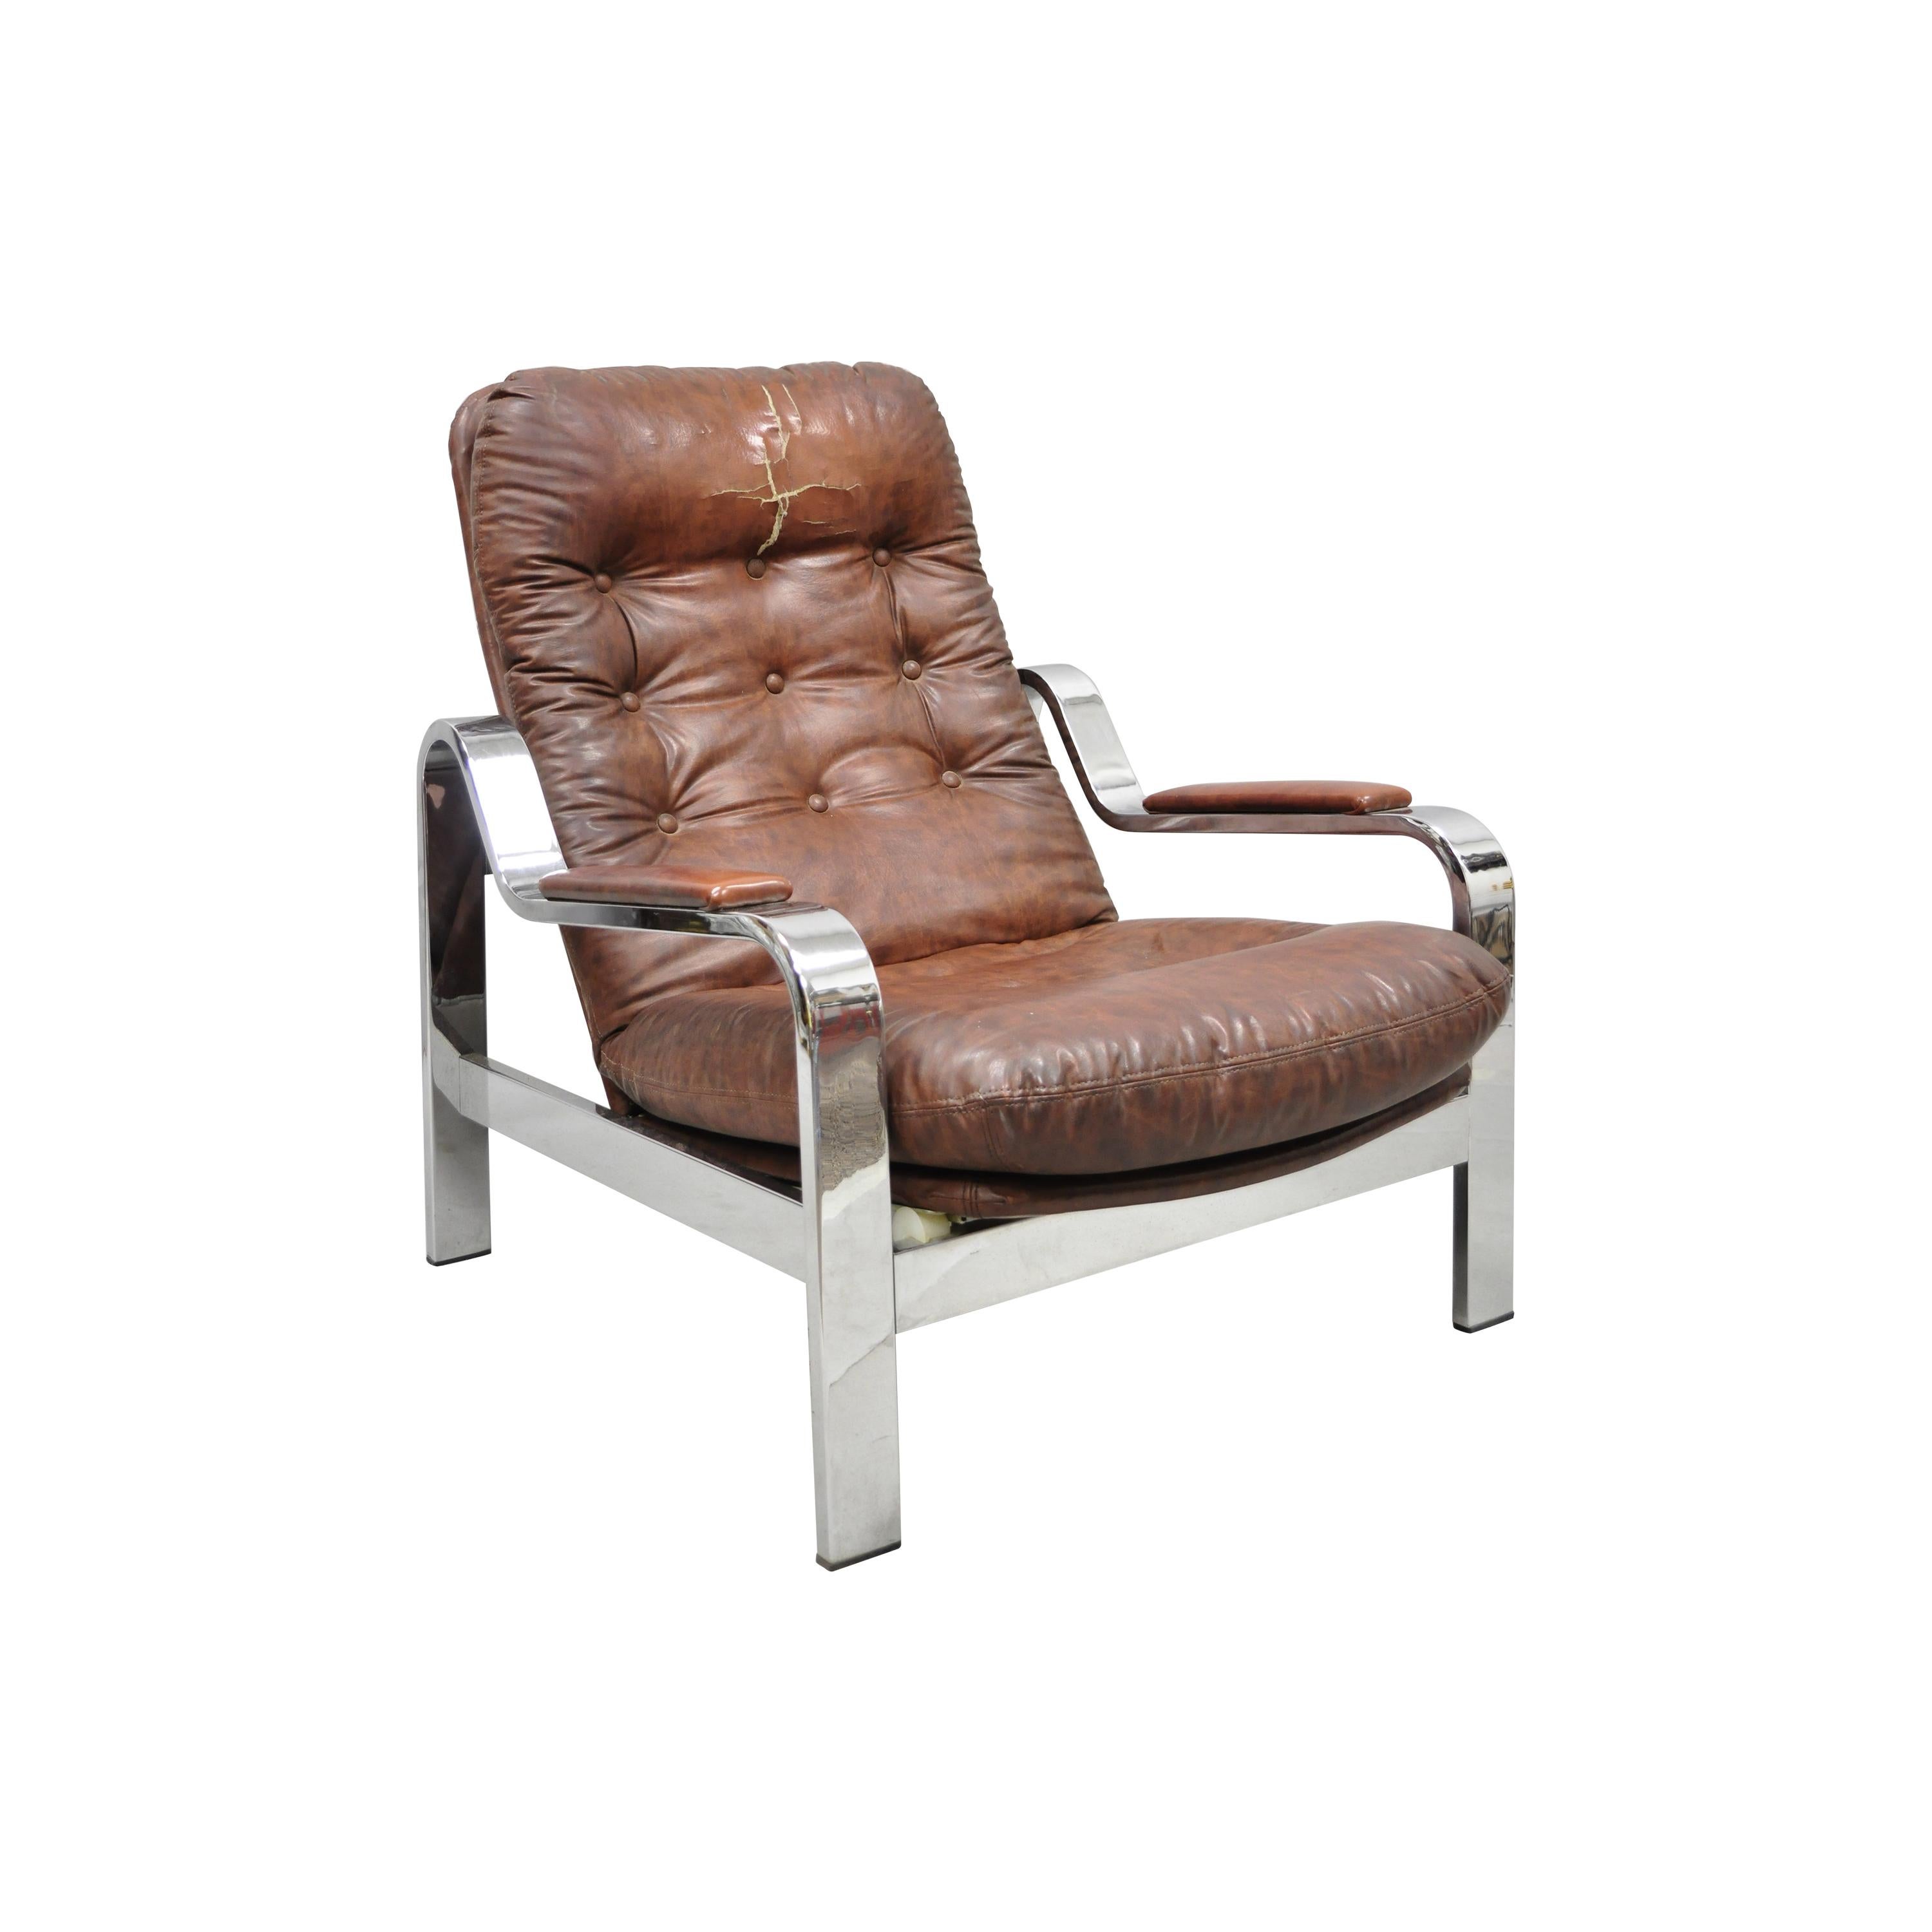 Midcentury Italian Modern Selig Chrome Reclining Recliner Lounge Chair